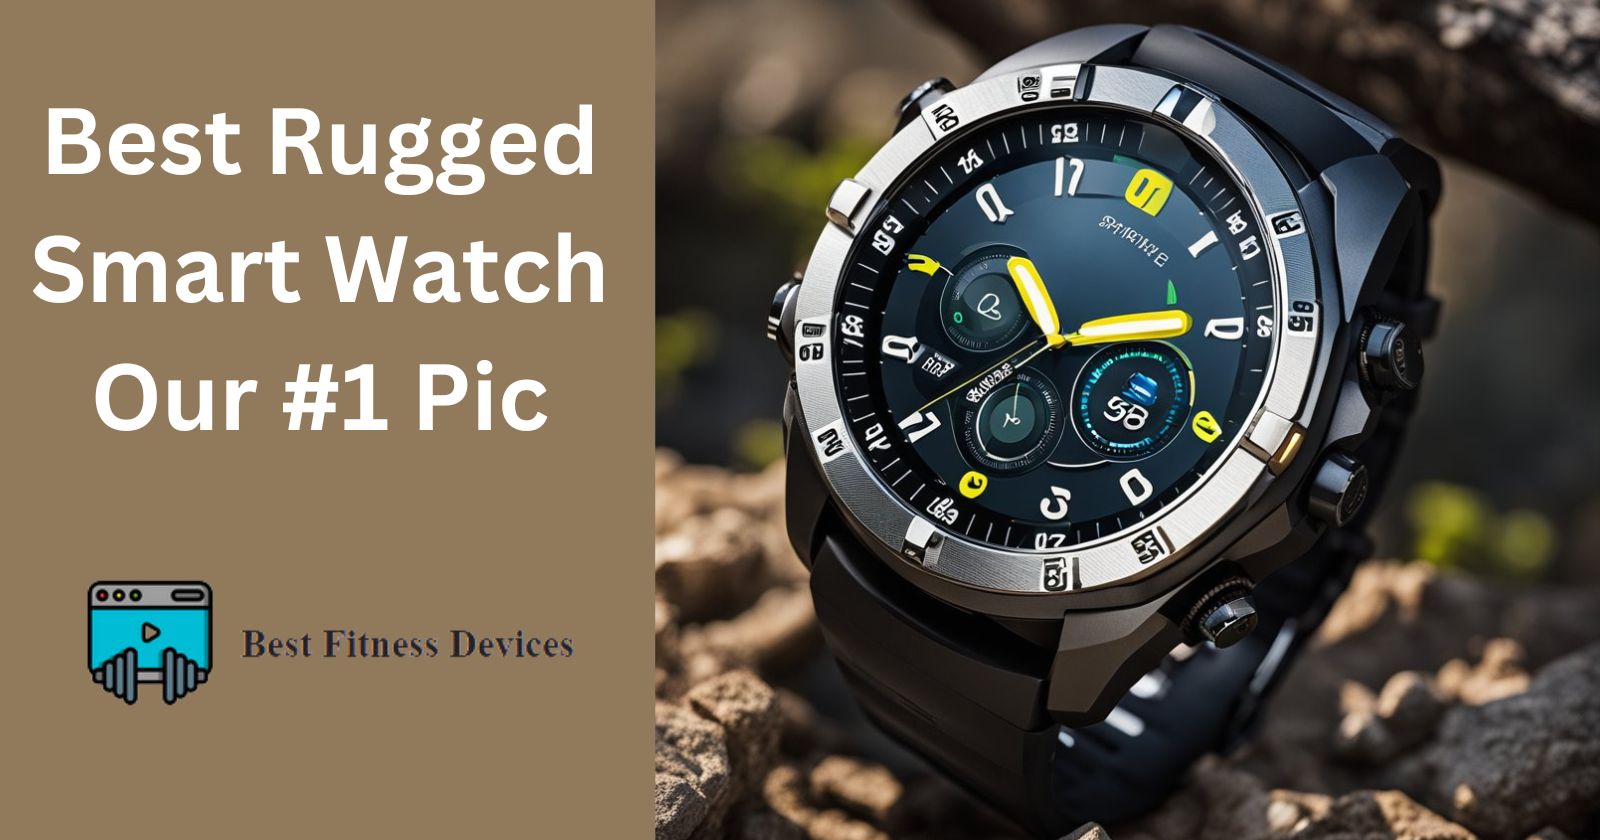 Best Rugged Smart Watch